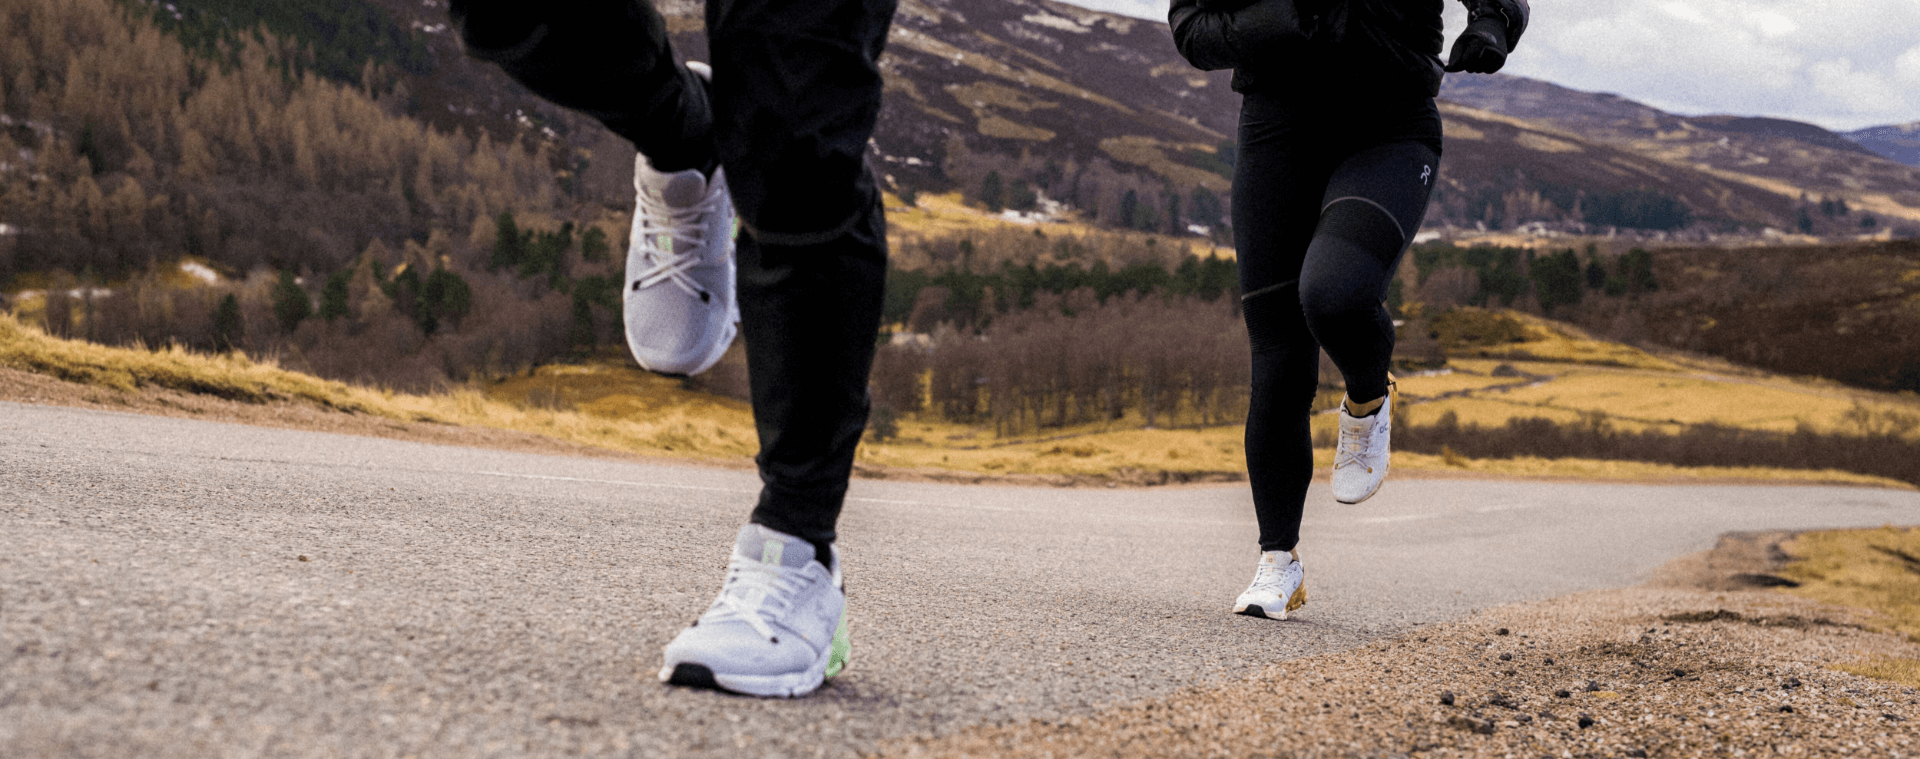 Men's Trail Running Shoes - Road Runner Sports